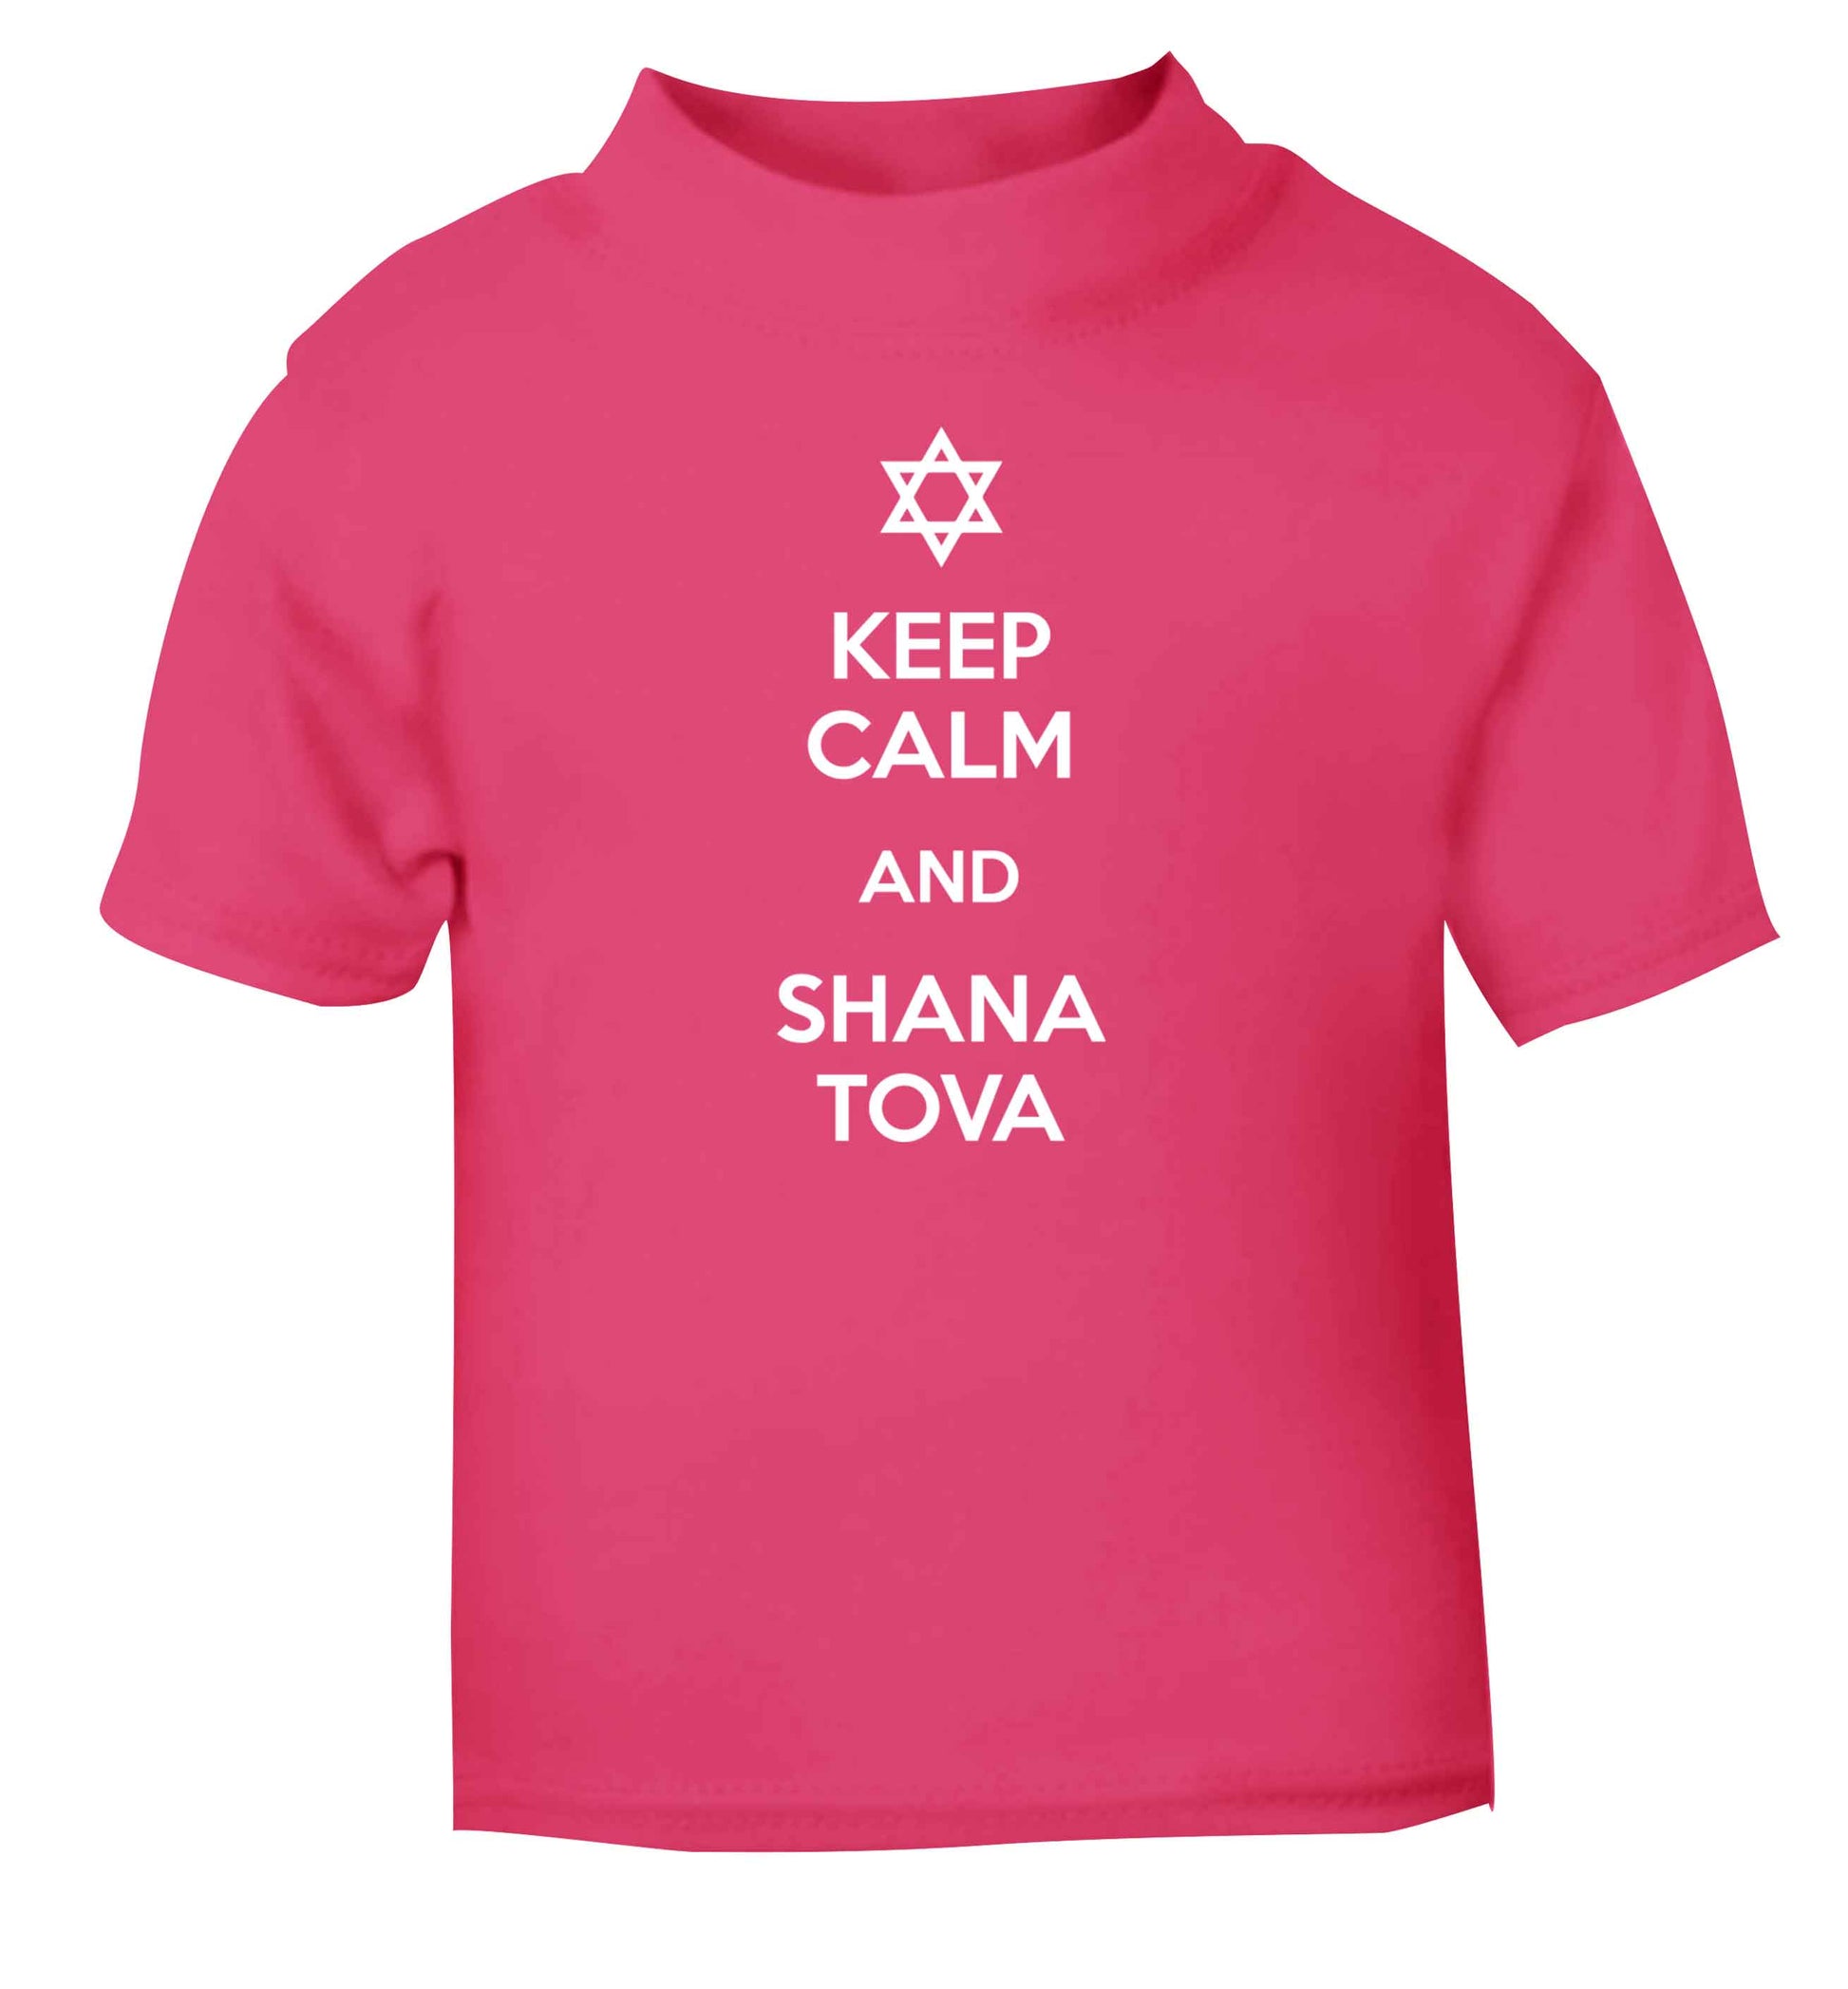 Keep calm and shana tova pink Baby Toddler Tshirt 2 Years